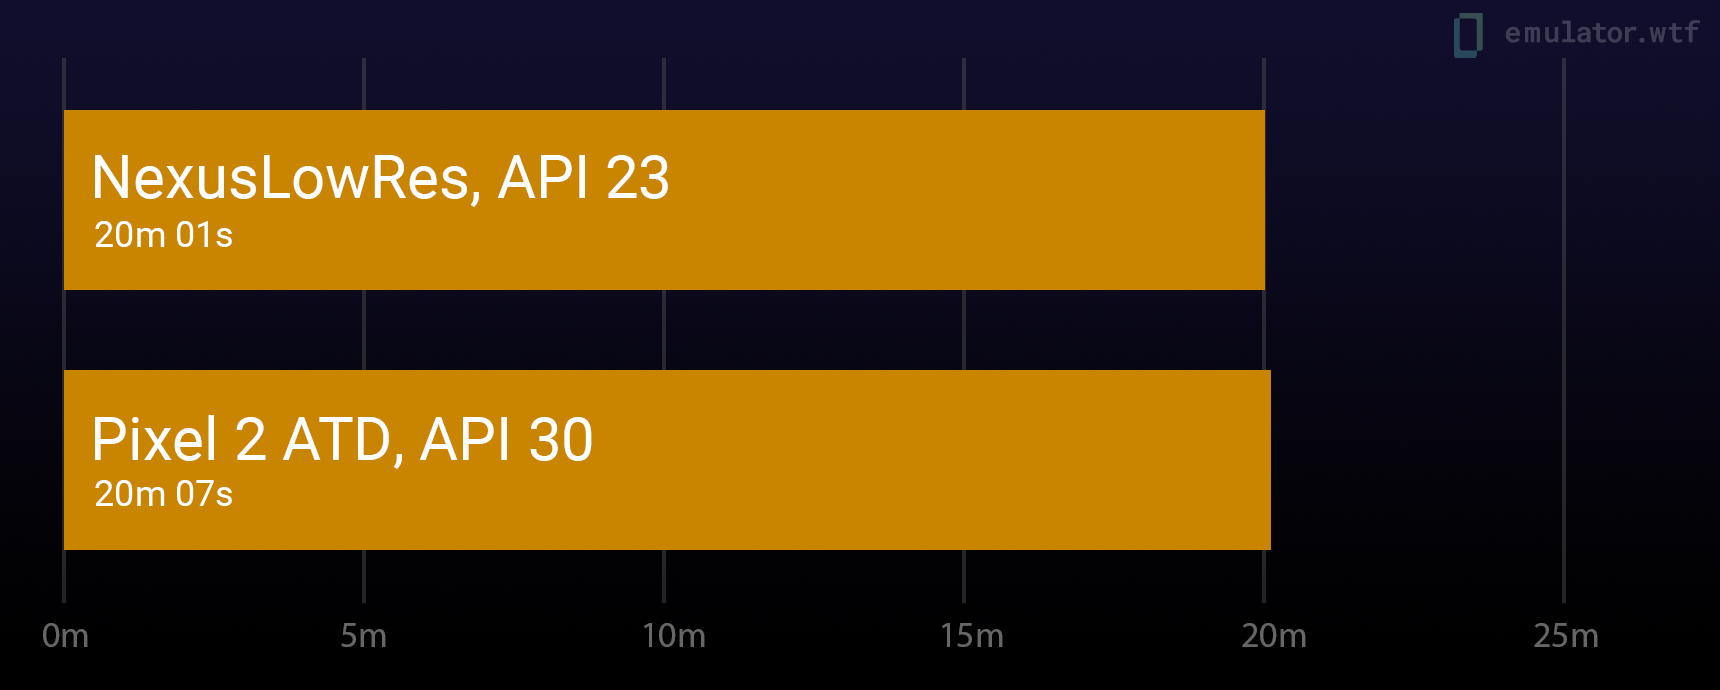 A side-by-side comparison of NexusLowRes API 23 (20m test duration) vs Pixel2 API 30 Atd (20m test duration)